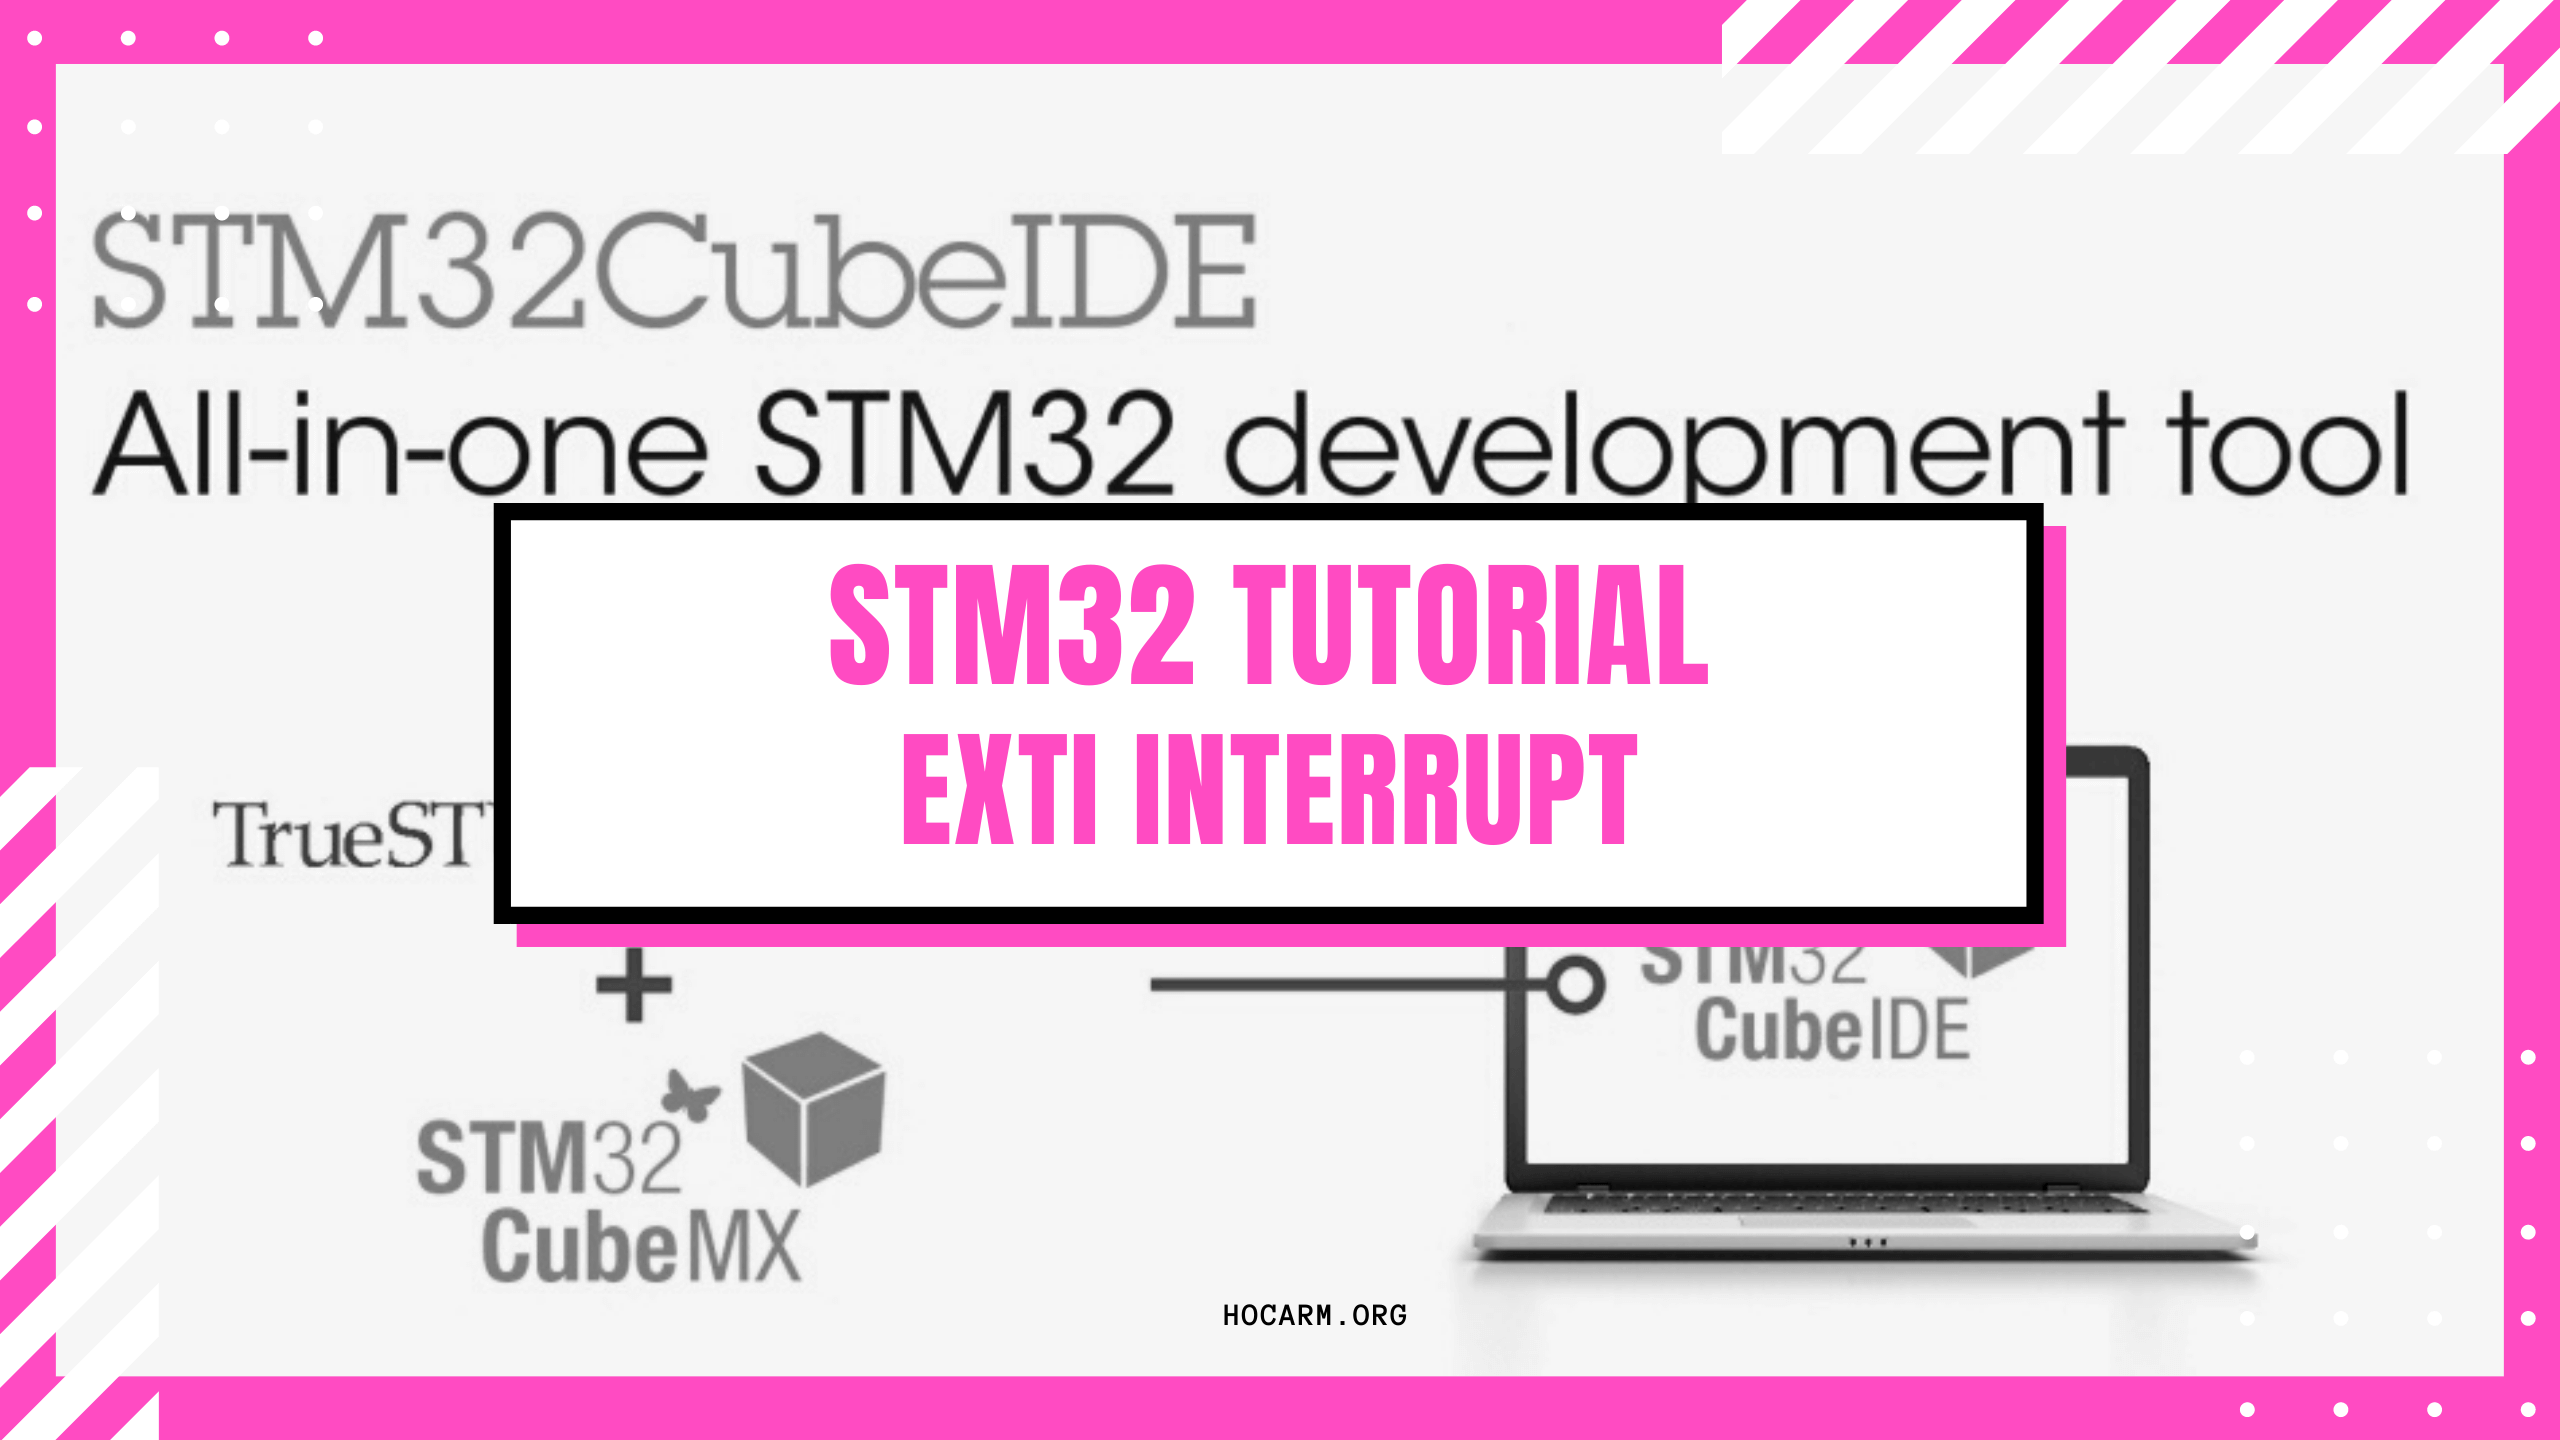 STM32CubeIDE Interrupt